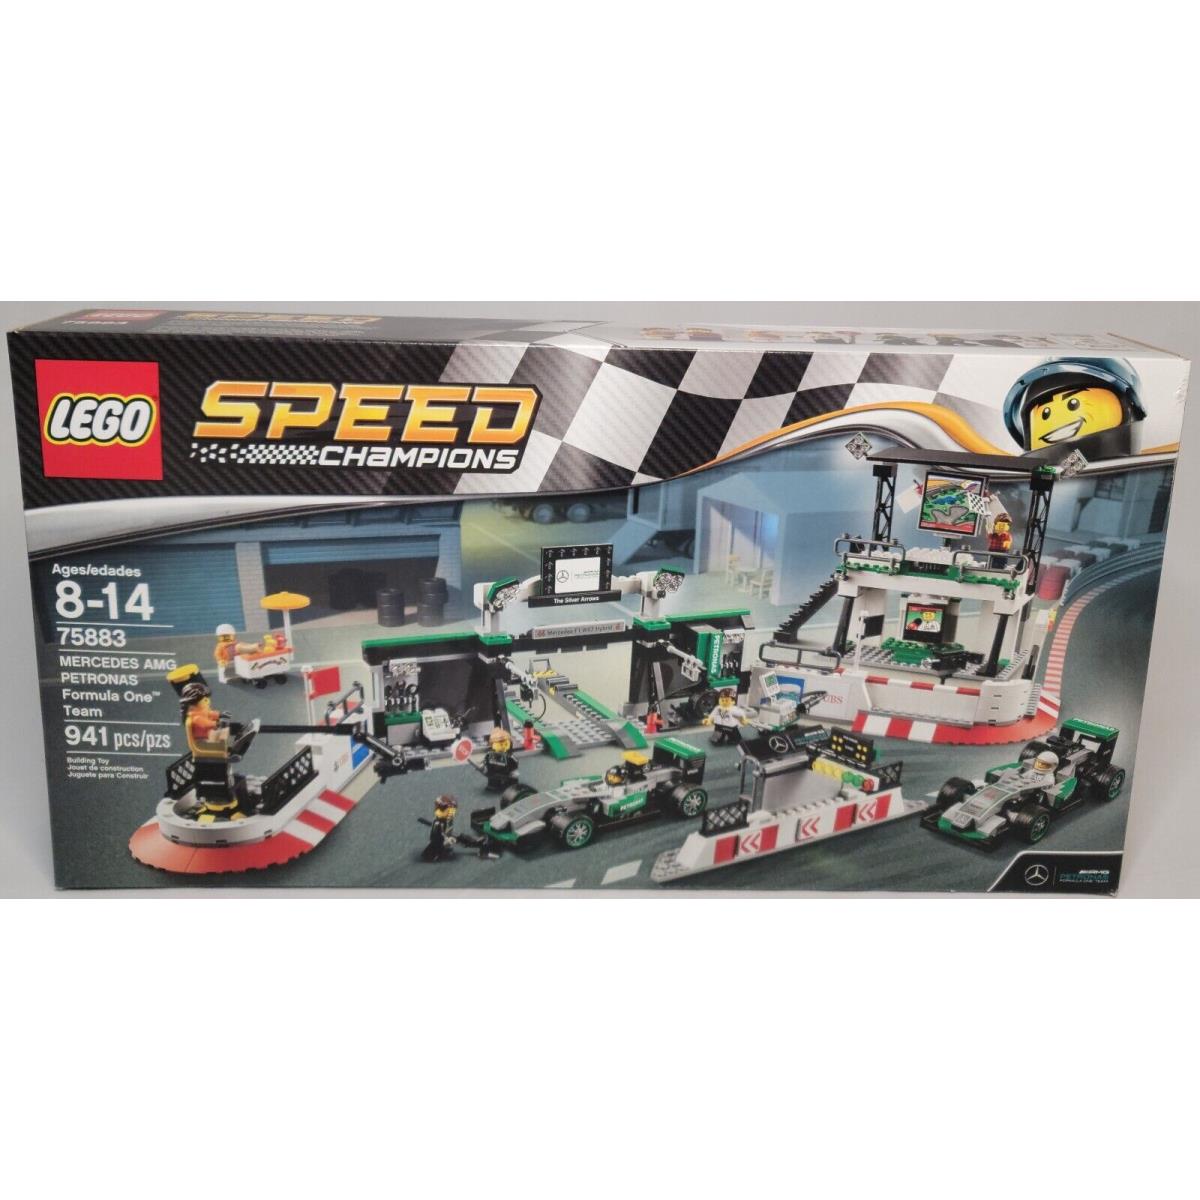 Lego 75883 Mercedes Amg Petronas Formula One Team Speed Champions